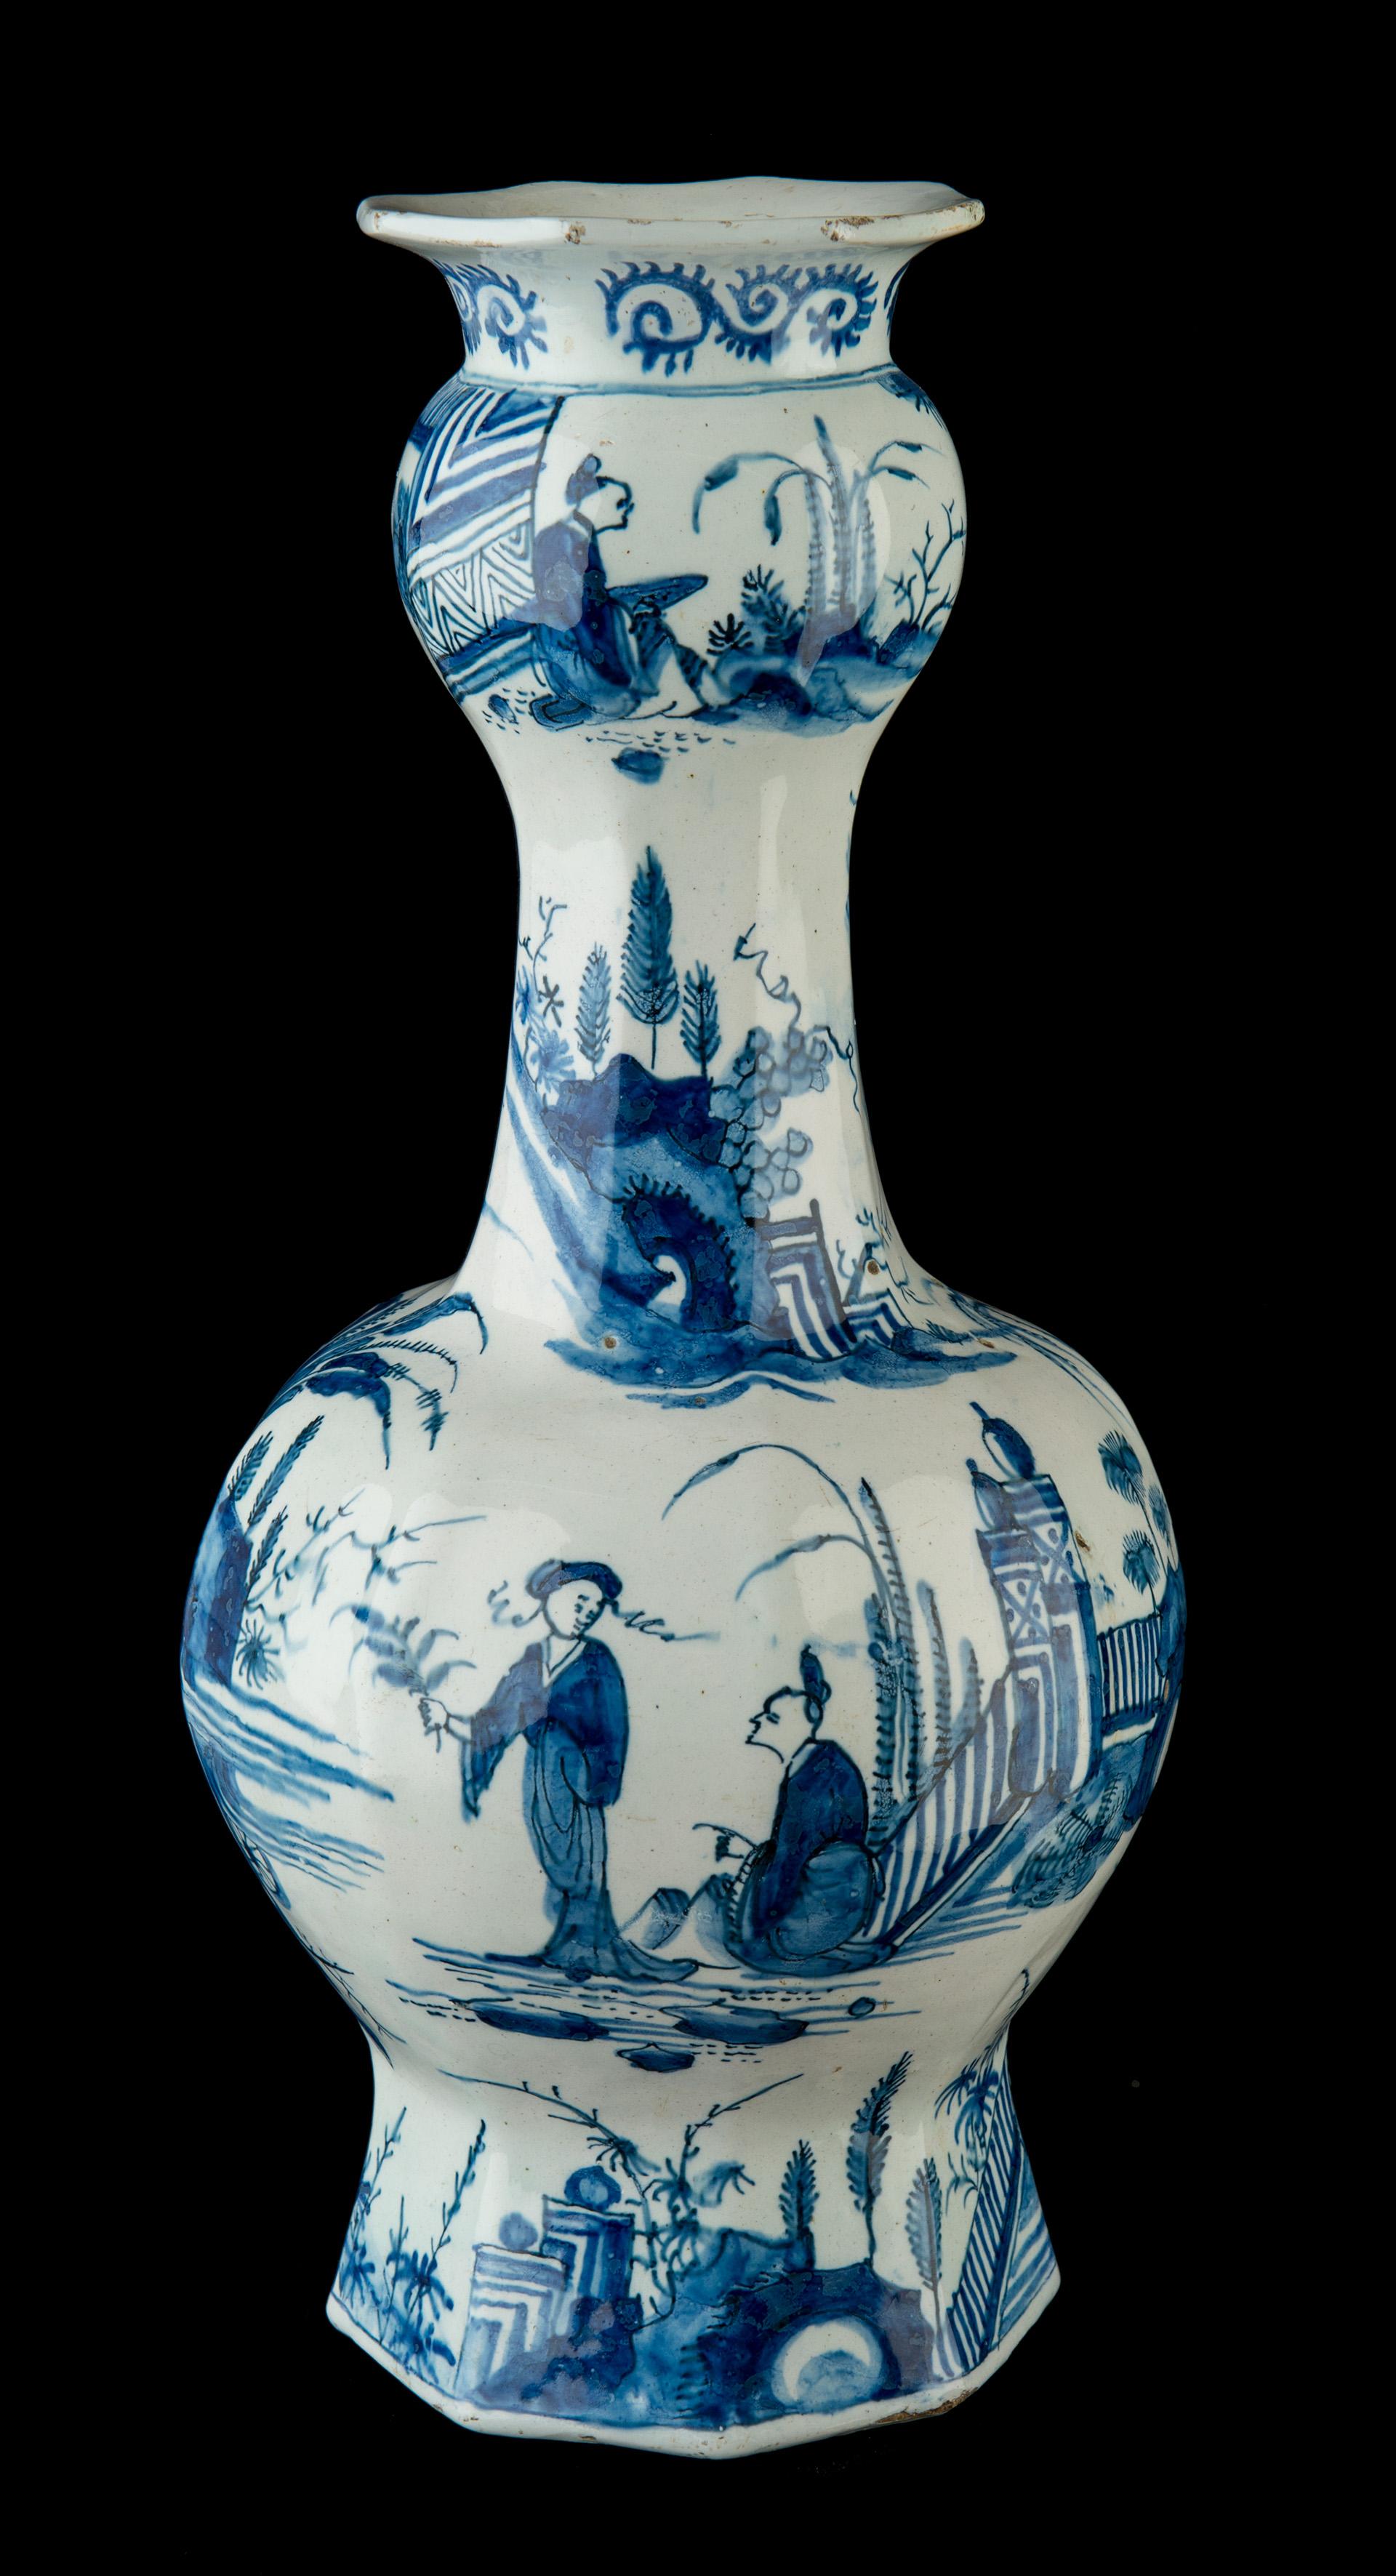 Dutch Delft, Pair of Blue and White Garlic-Head Bottle Vases, circa 1700